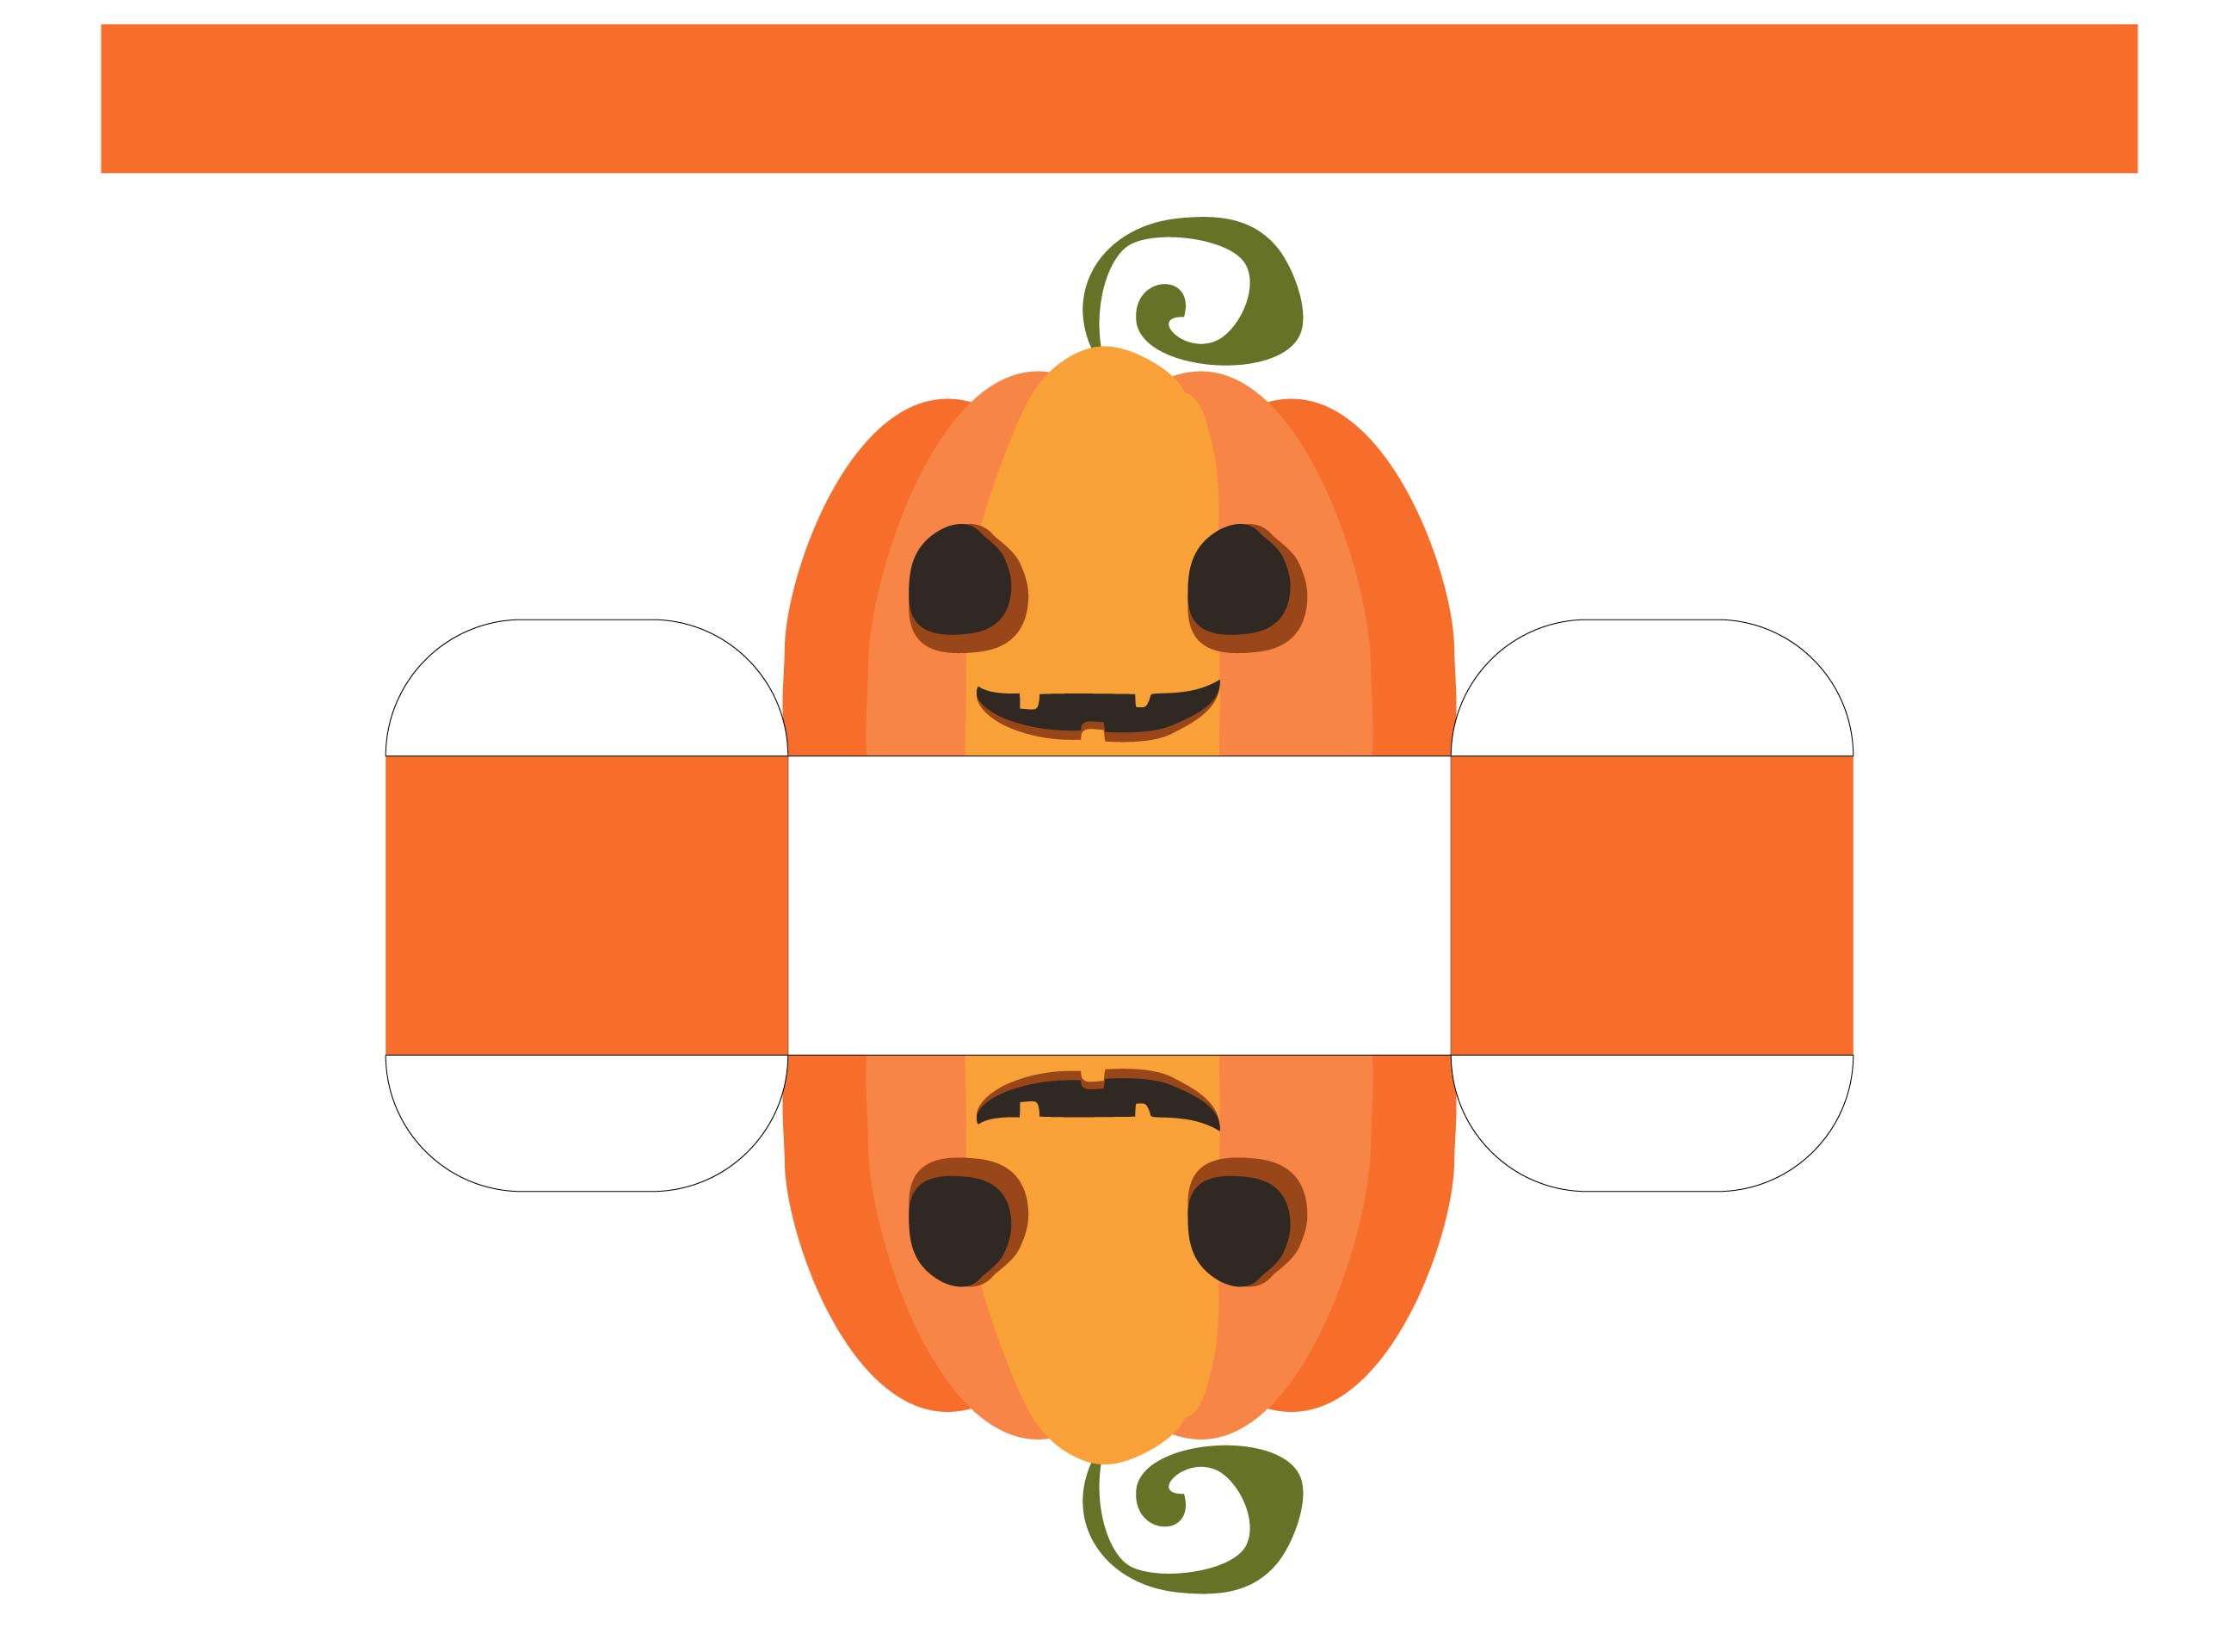 Halloween Paper Pumpkin Basket Printable